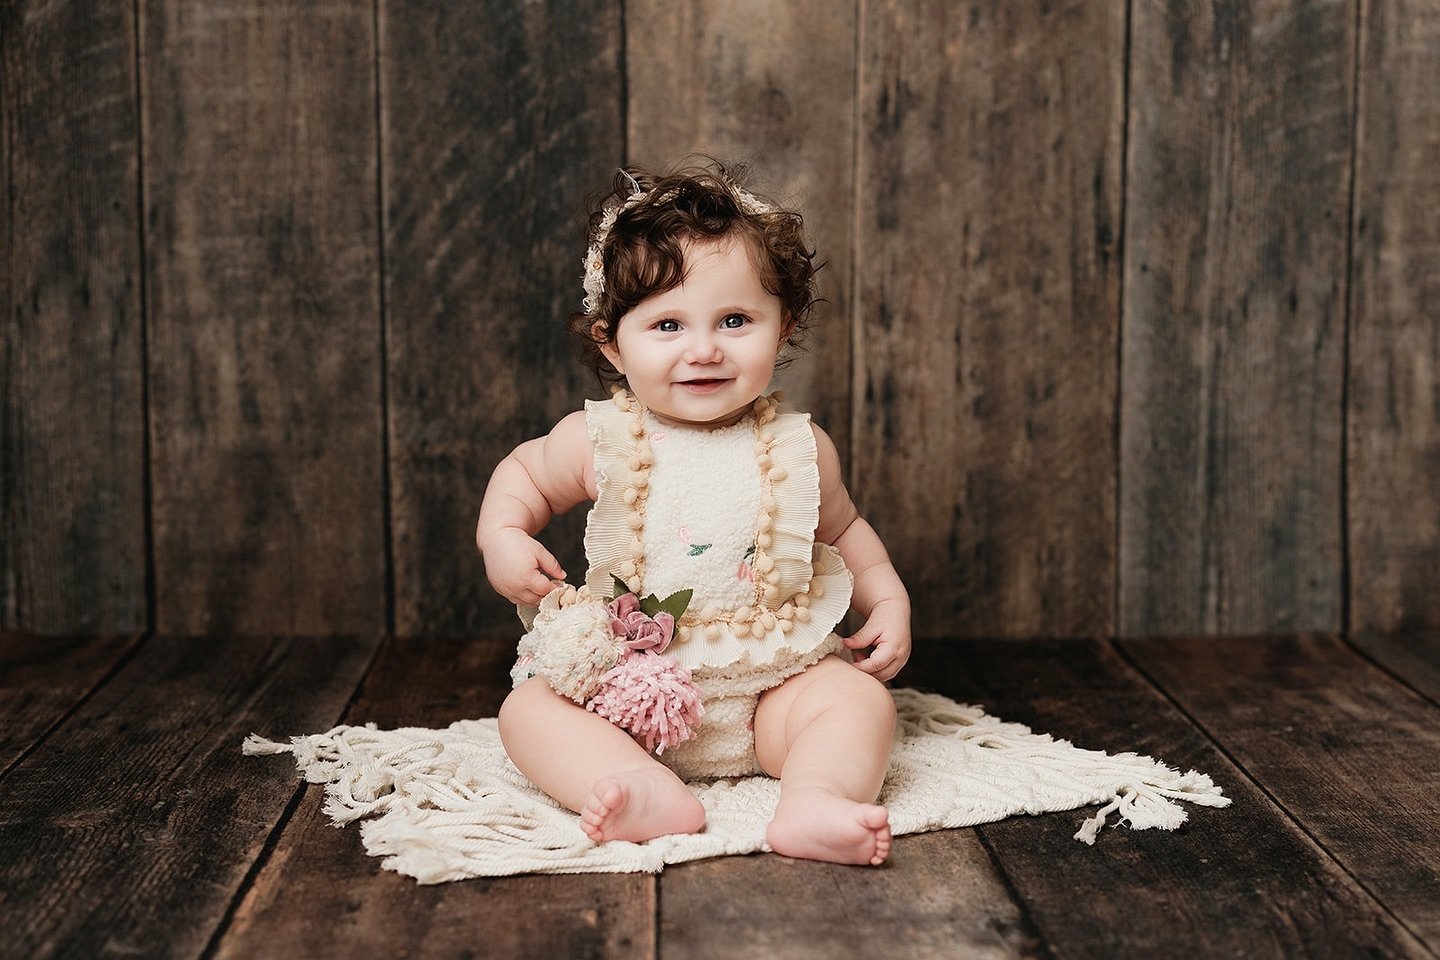 Cutest Sitter Baby Amelia😍😍😍

#sittersession #sitterbaby #dfwfamilyphotographer #babyportrait #cutebaby